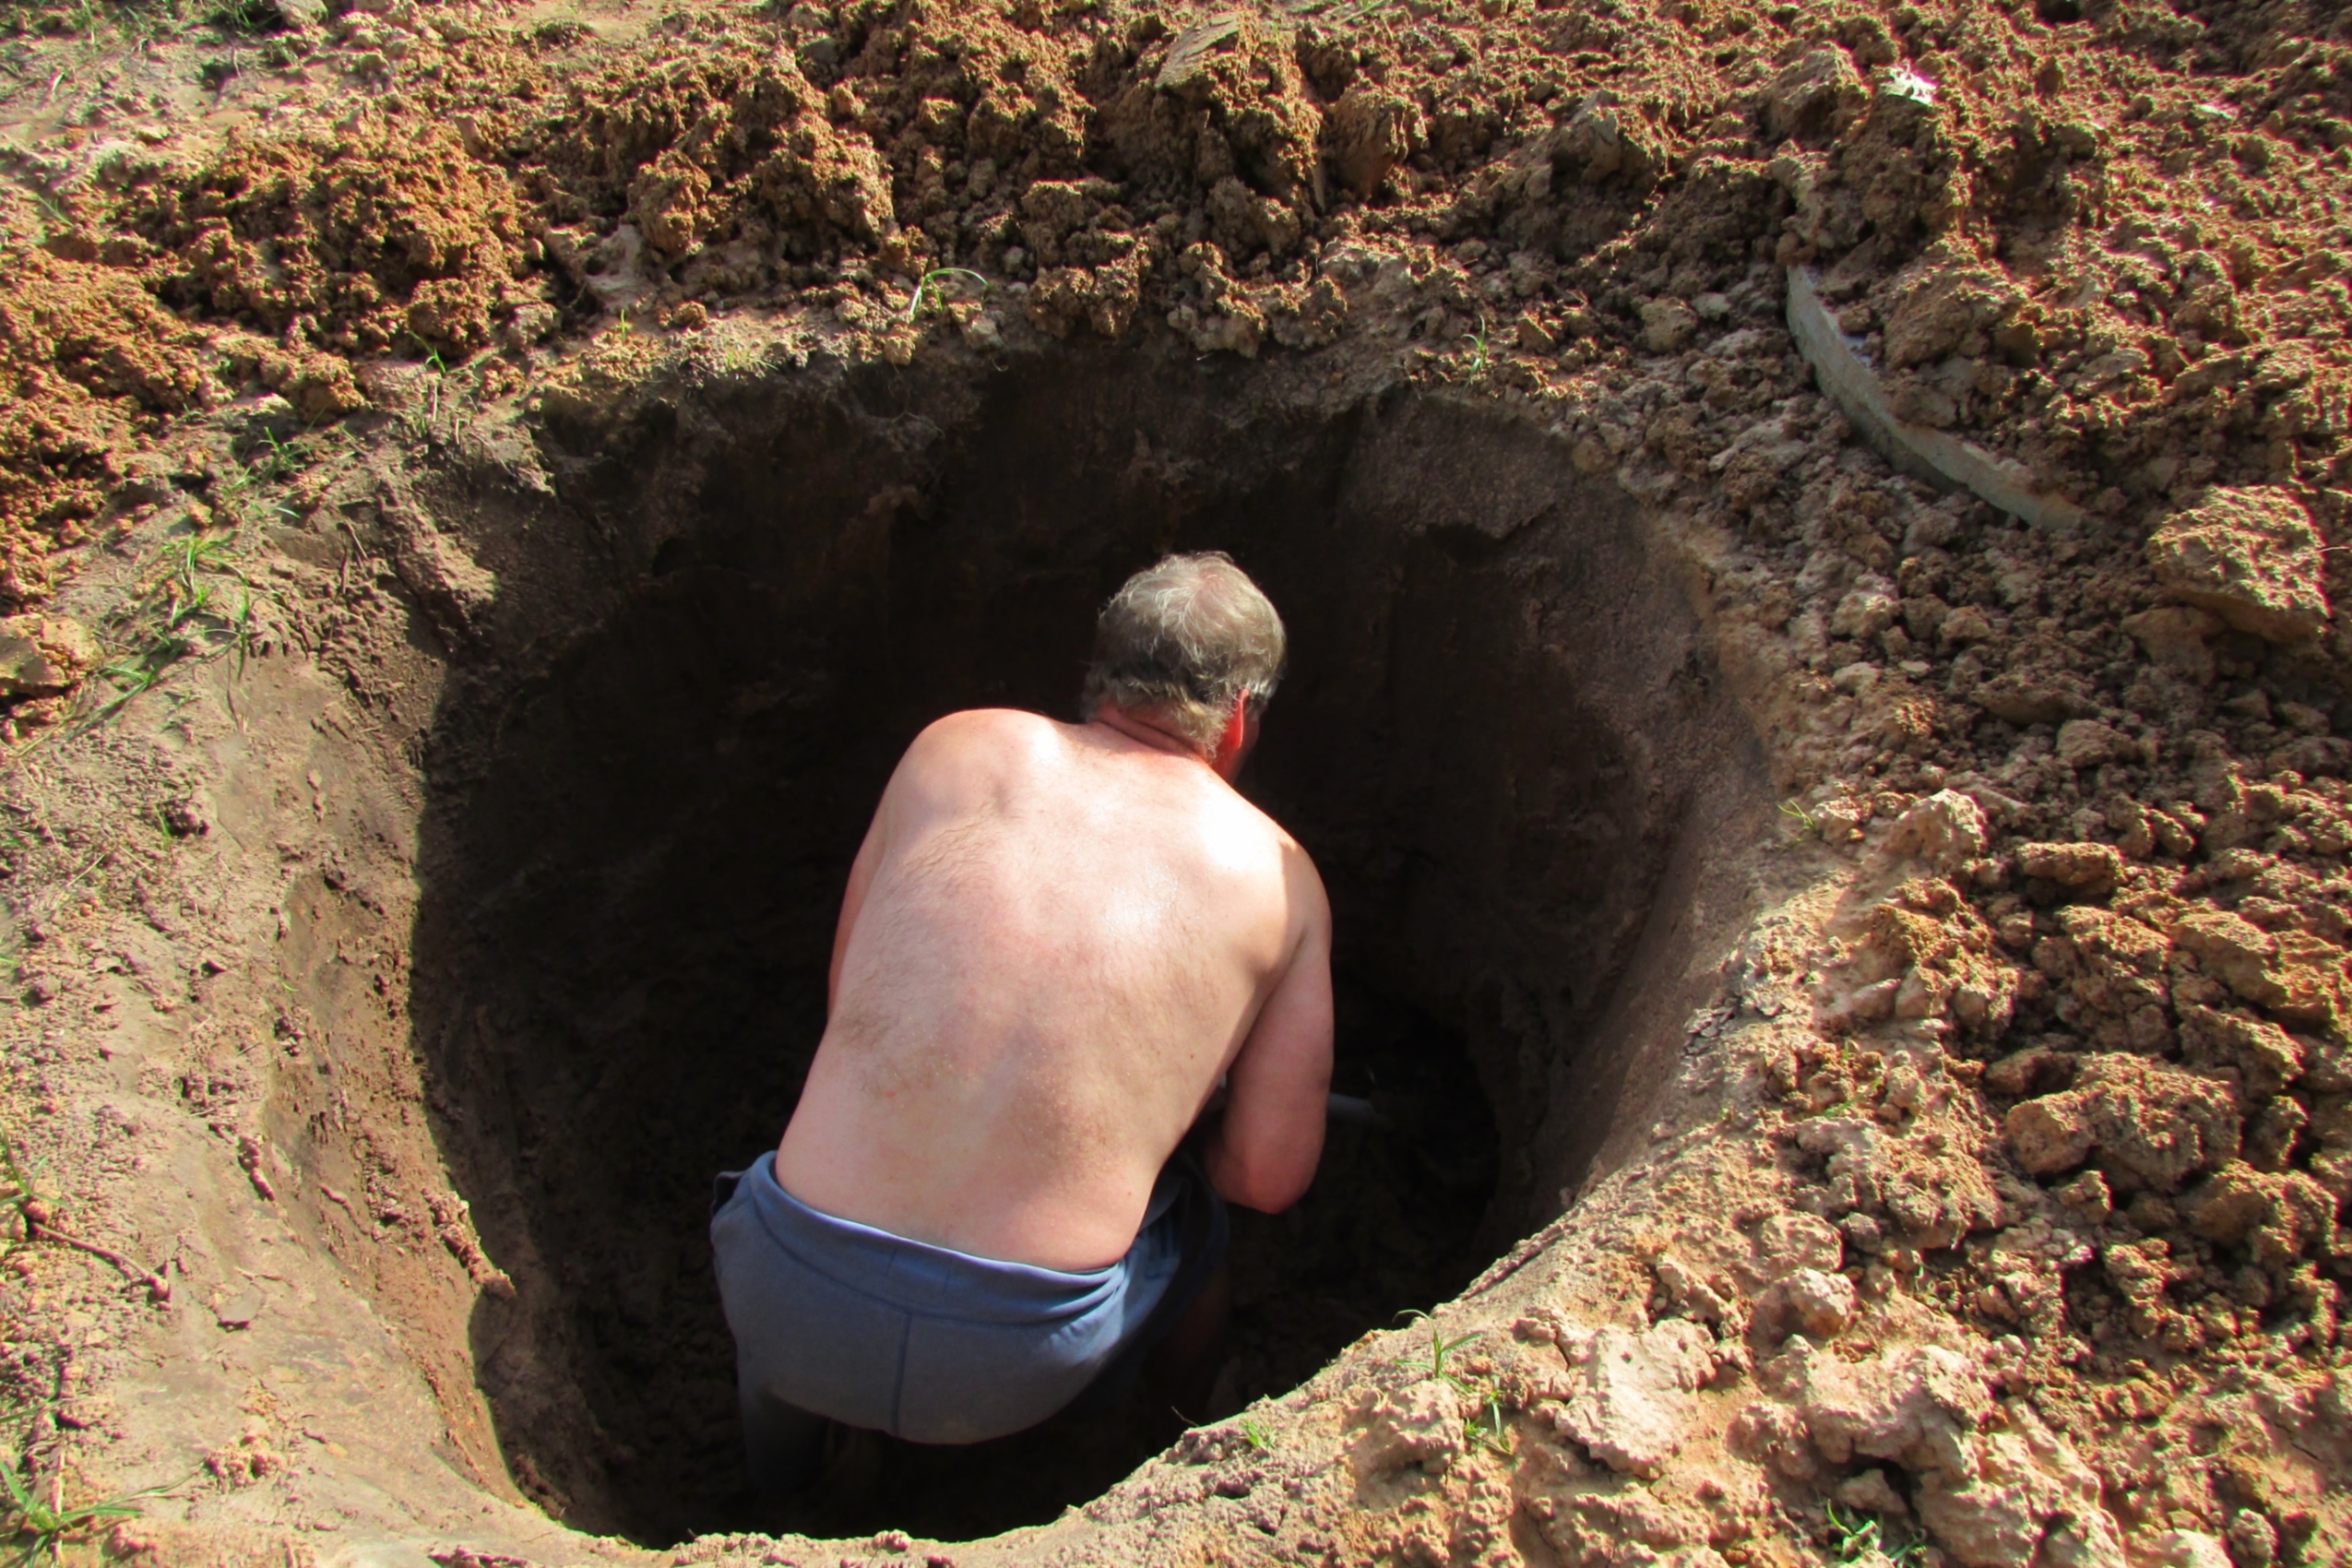 Man digging a hole. | Source: Shutterstock